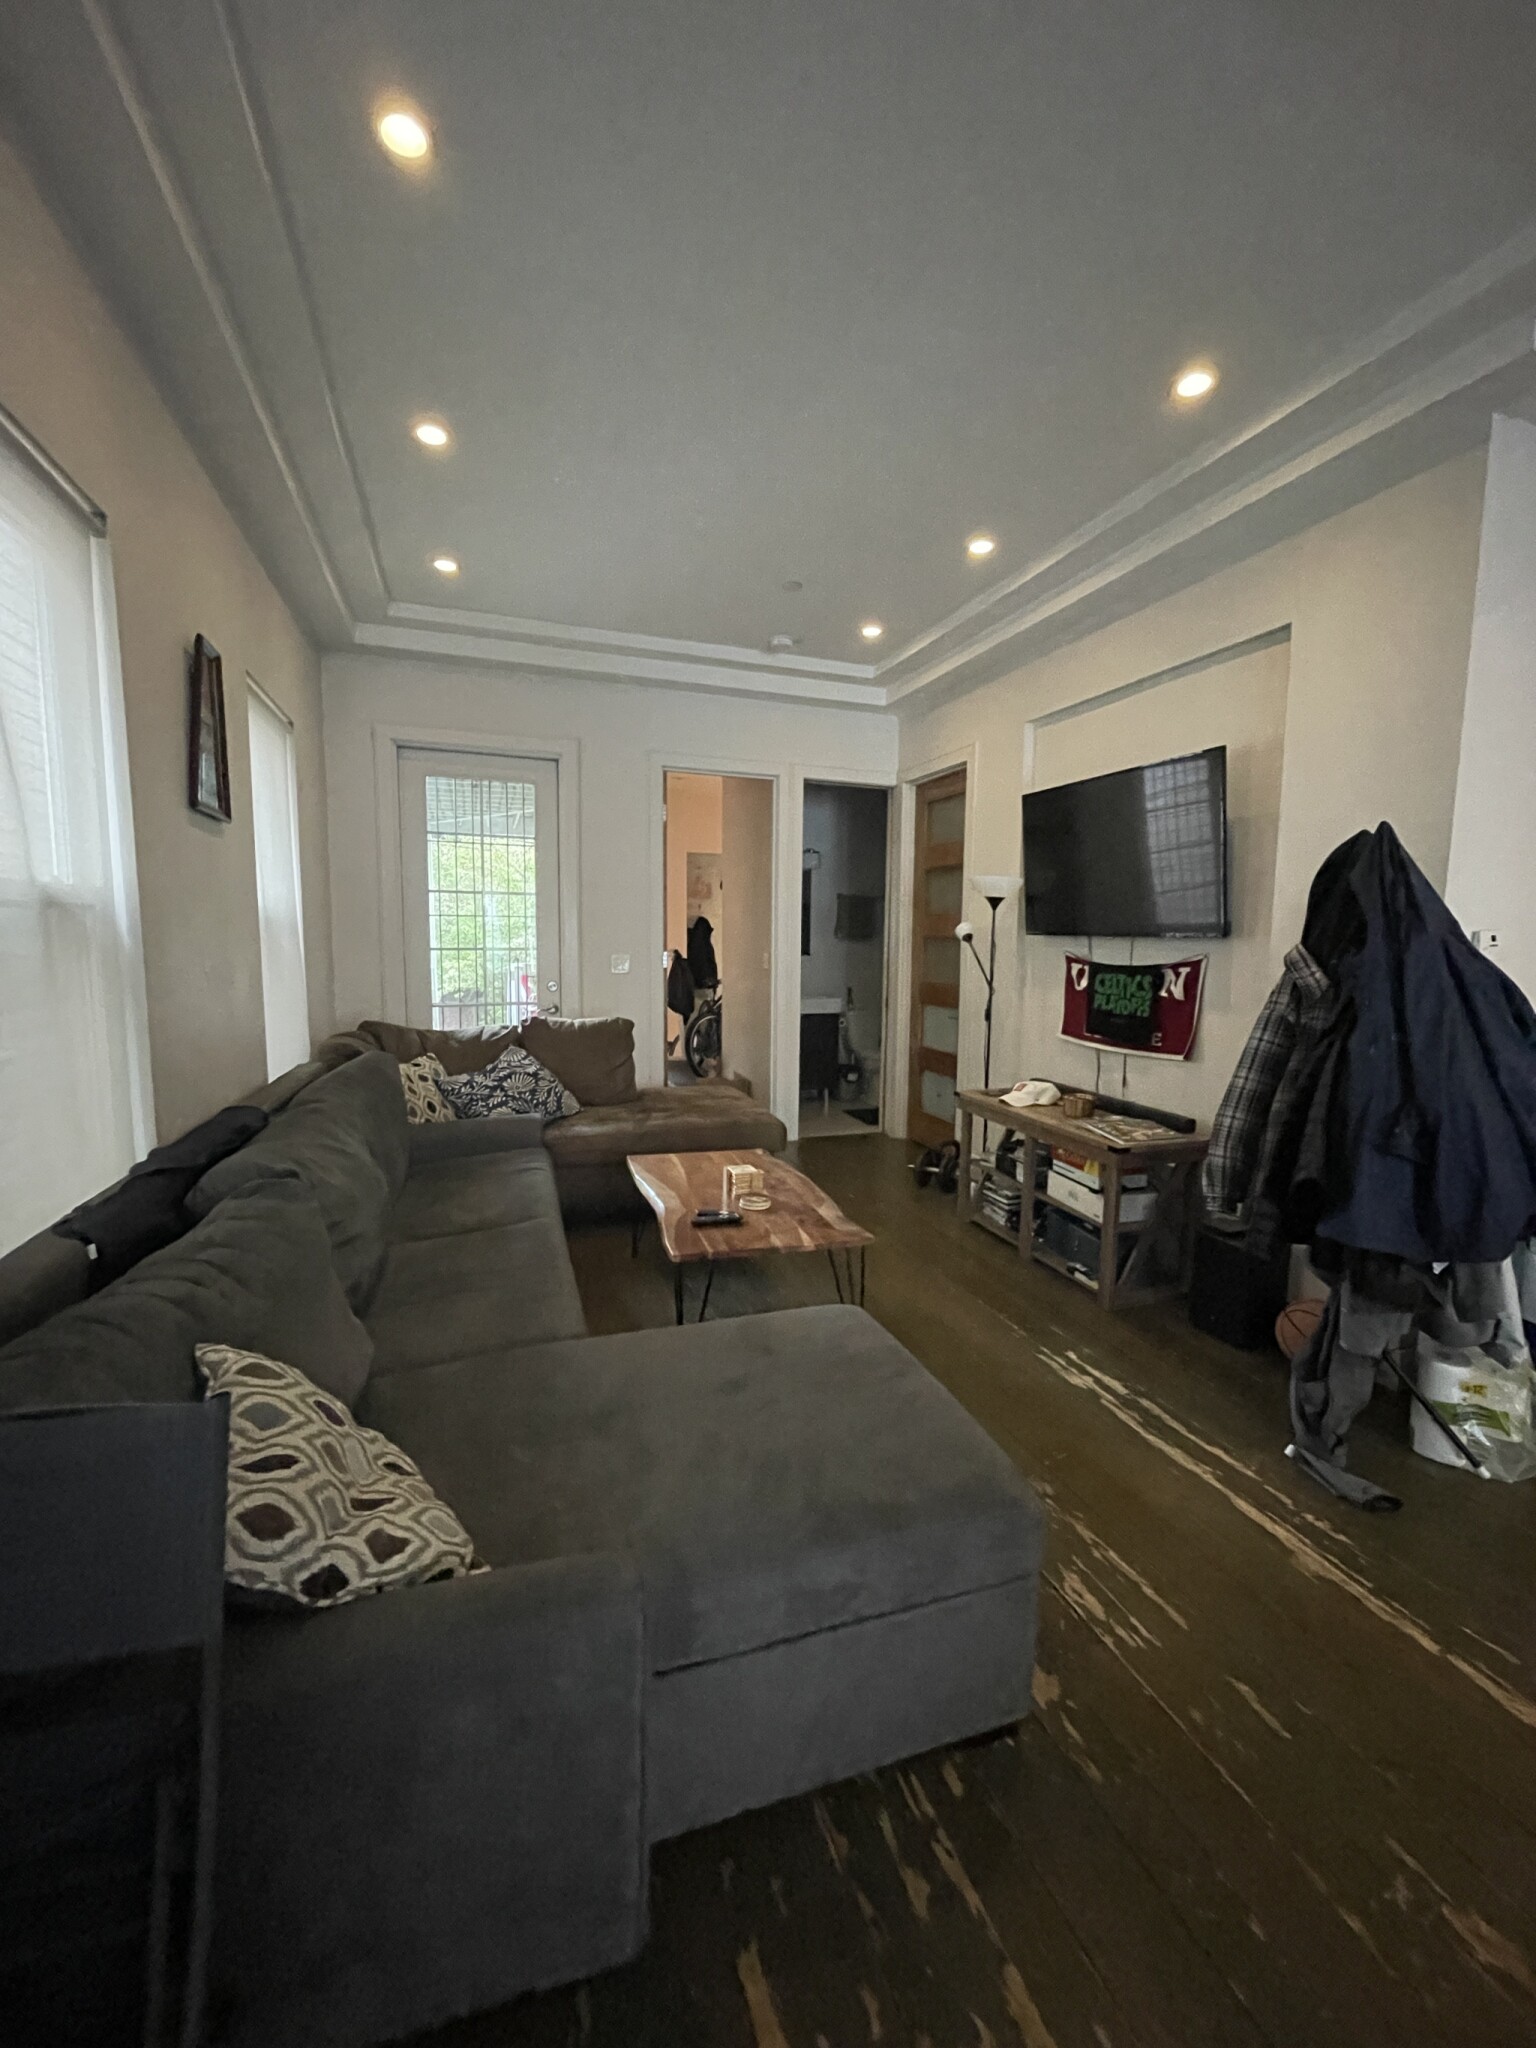 Photos of apartment on Washburn St.,Boston MA 02125